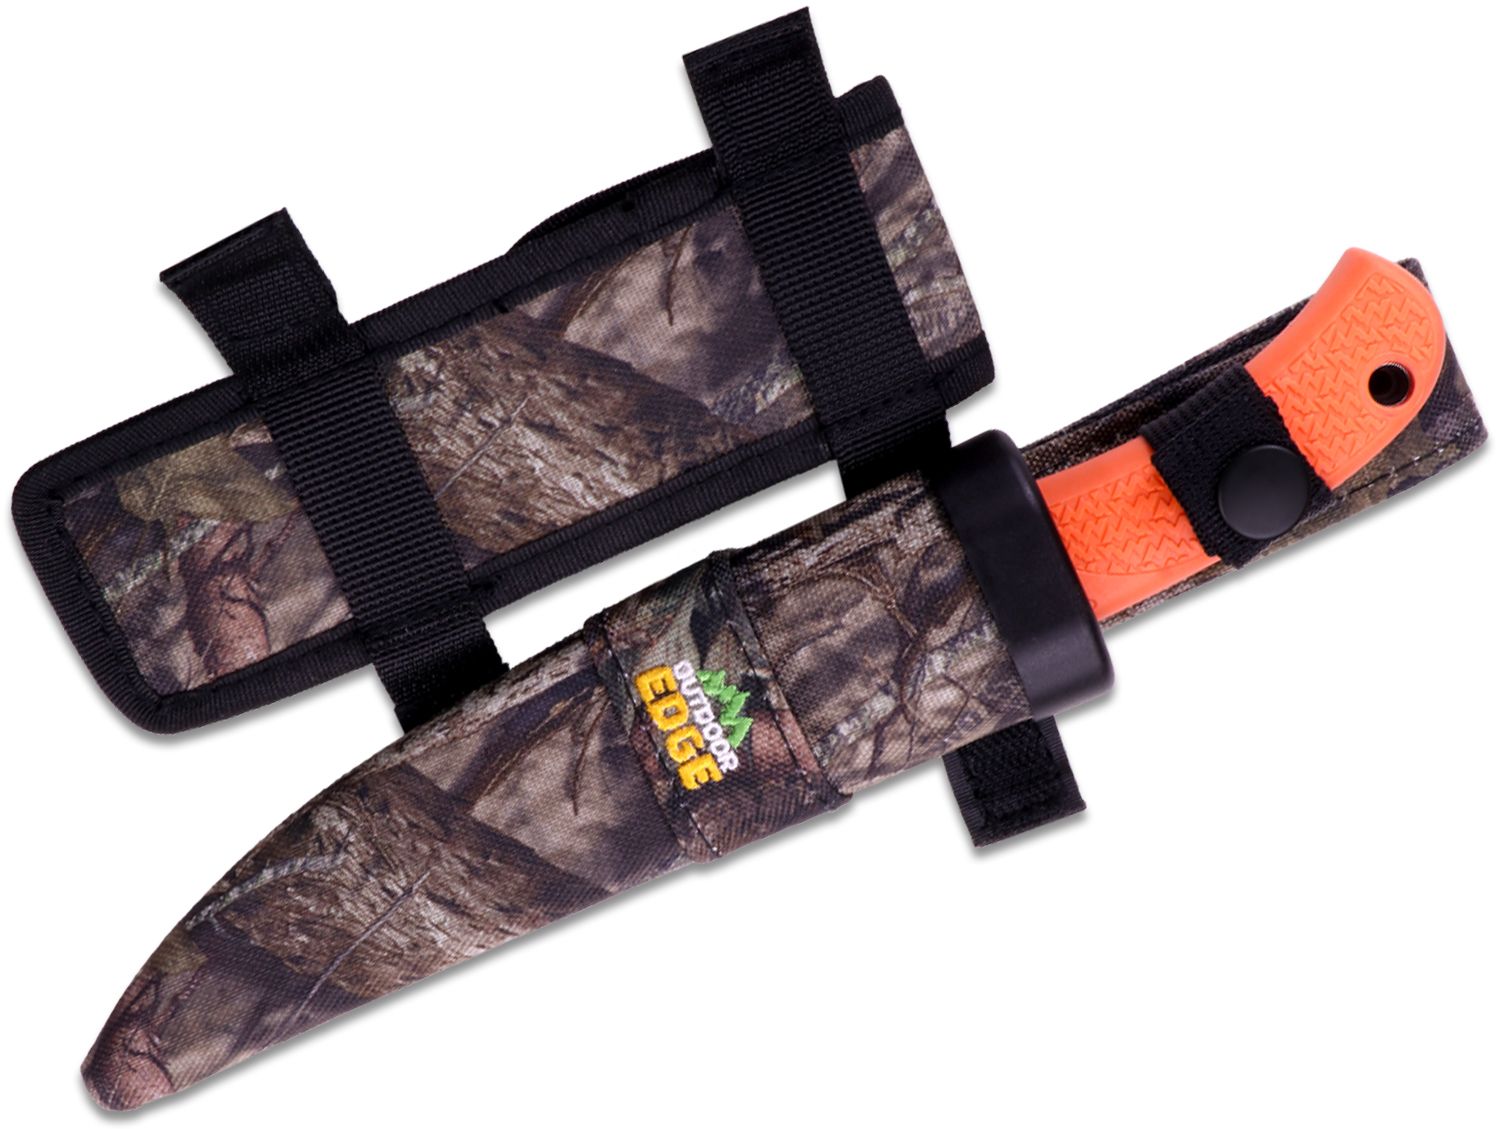 Outdoor Edge RazorMax Fixed Blade Knife 3.5 and 5 Interchangeable Blades,  Orange TPR Handles, Mossy Oak Nylon Sheath - KnifeCenter - RMK-20C -  Discontinued